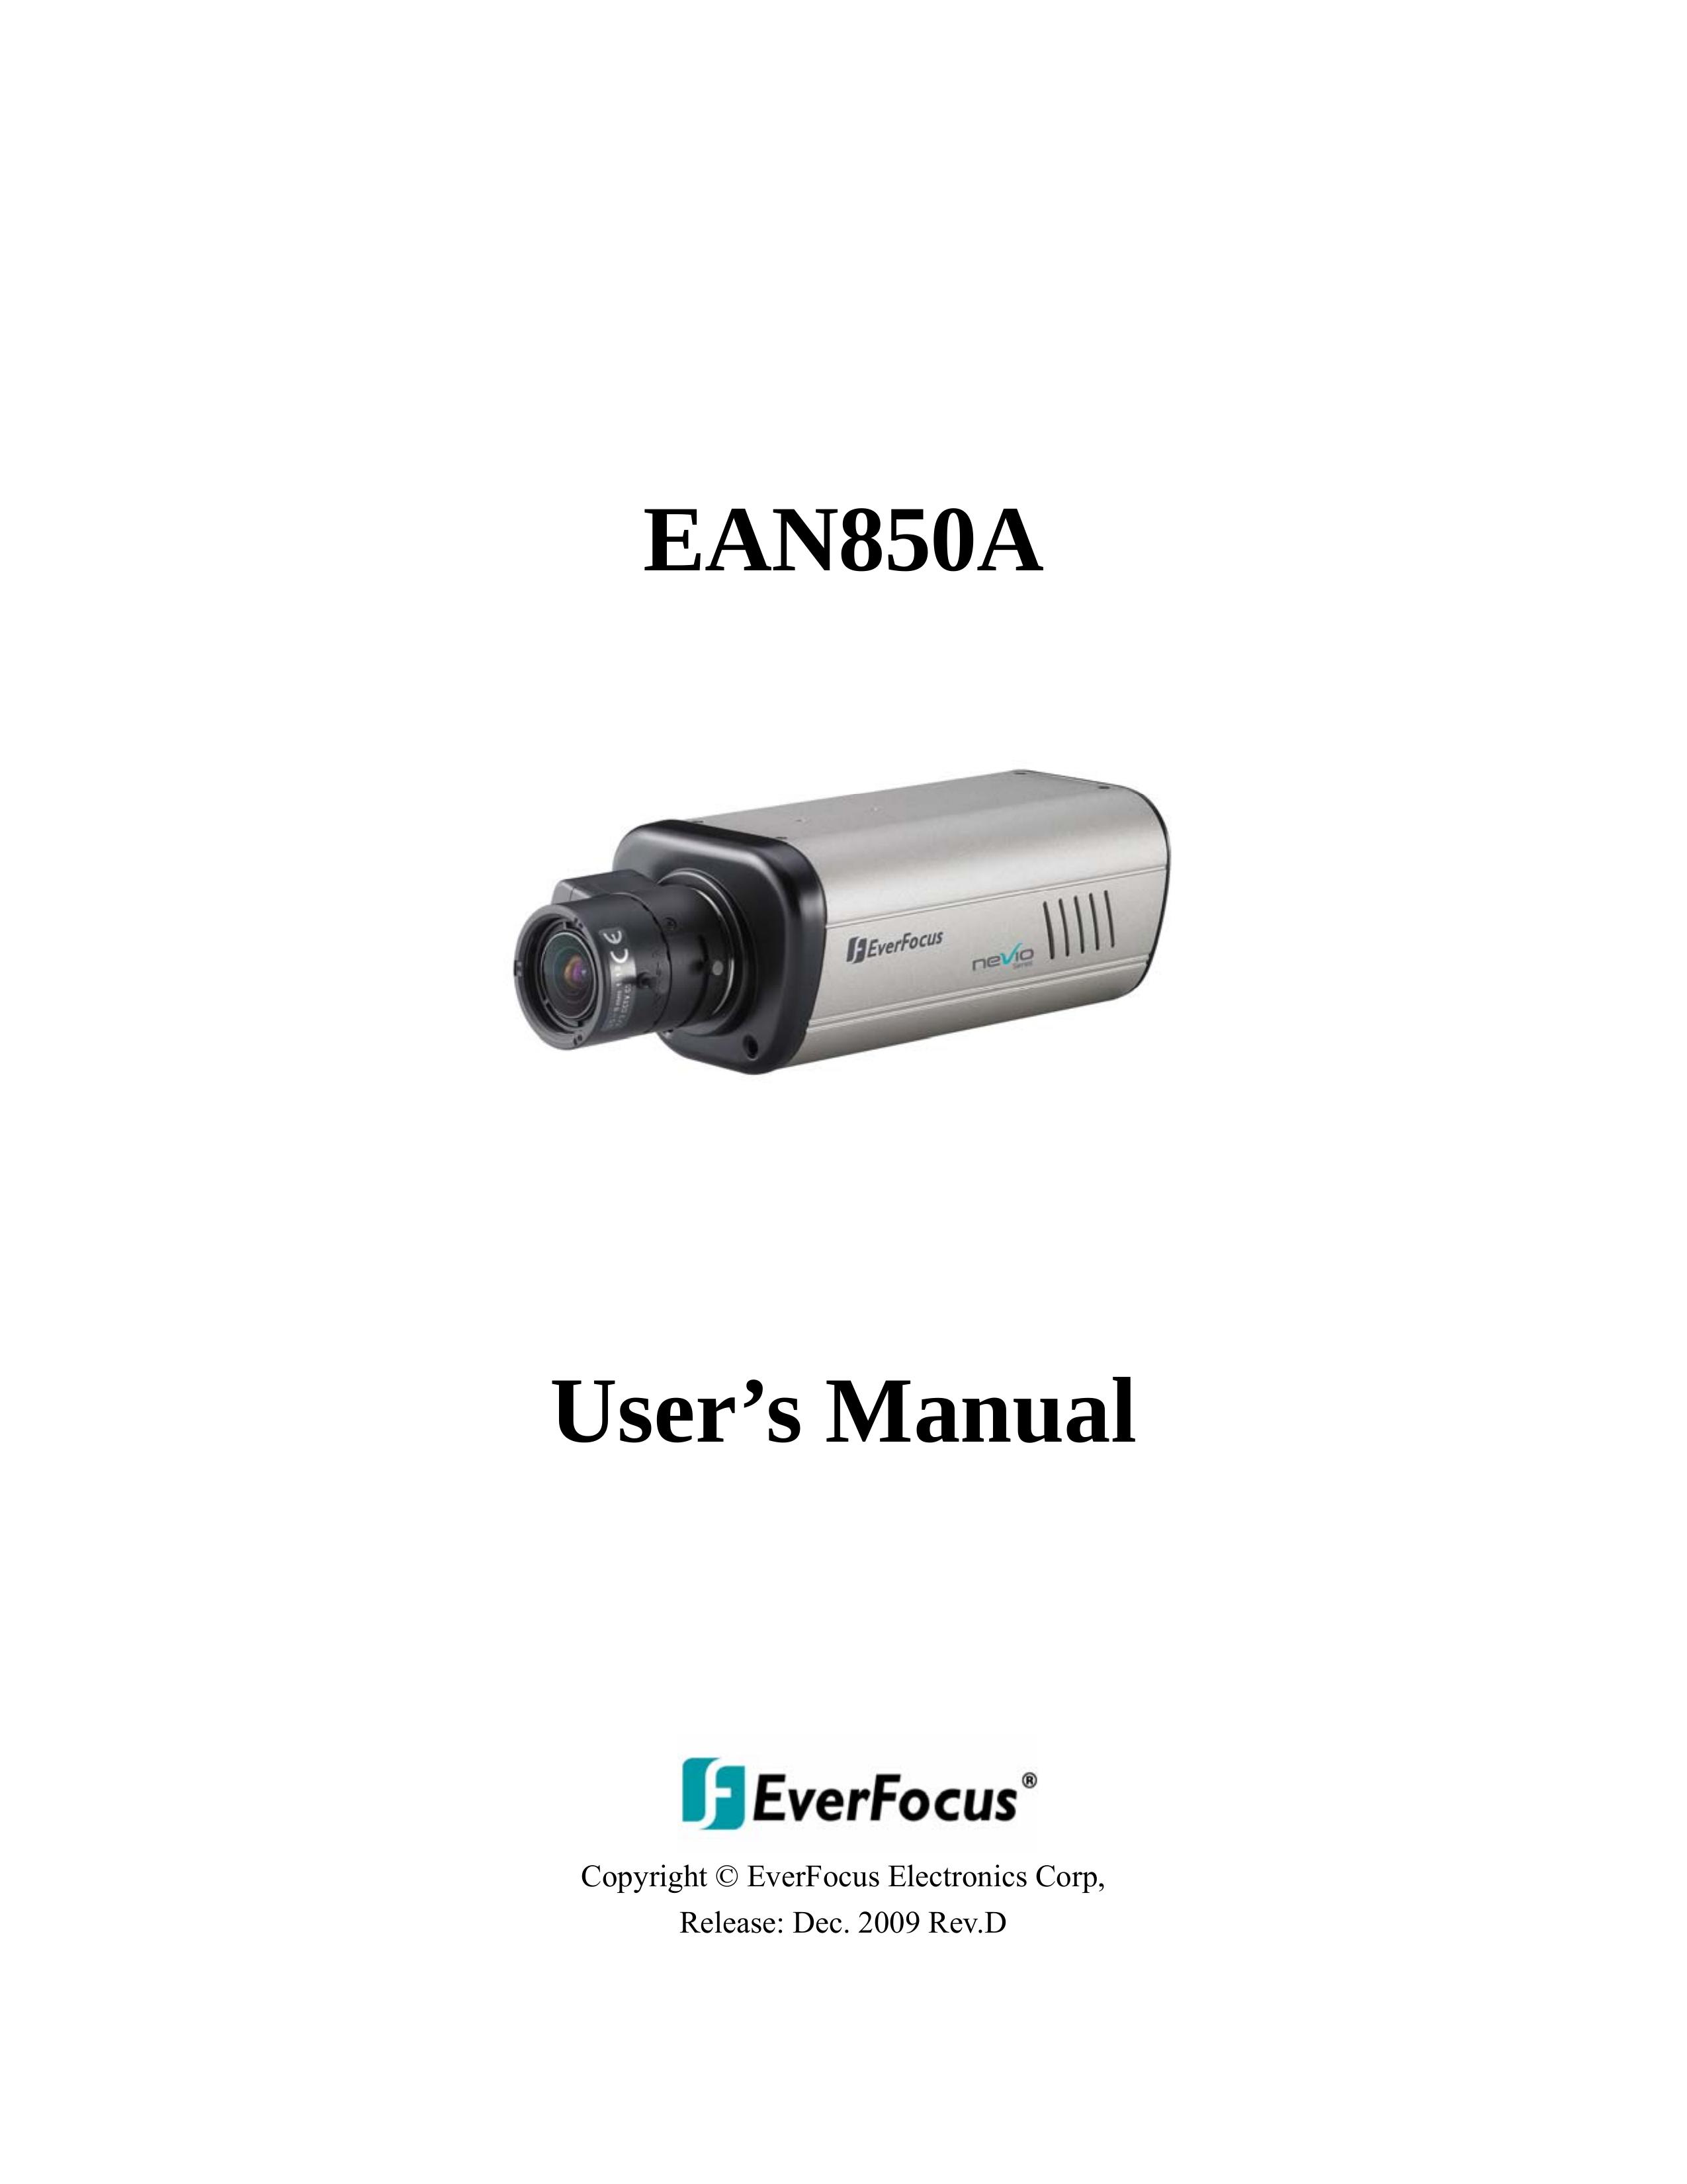 EverFocus EAN850A Security Camera User Manual